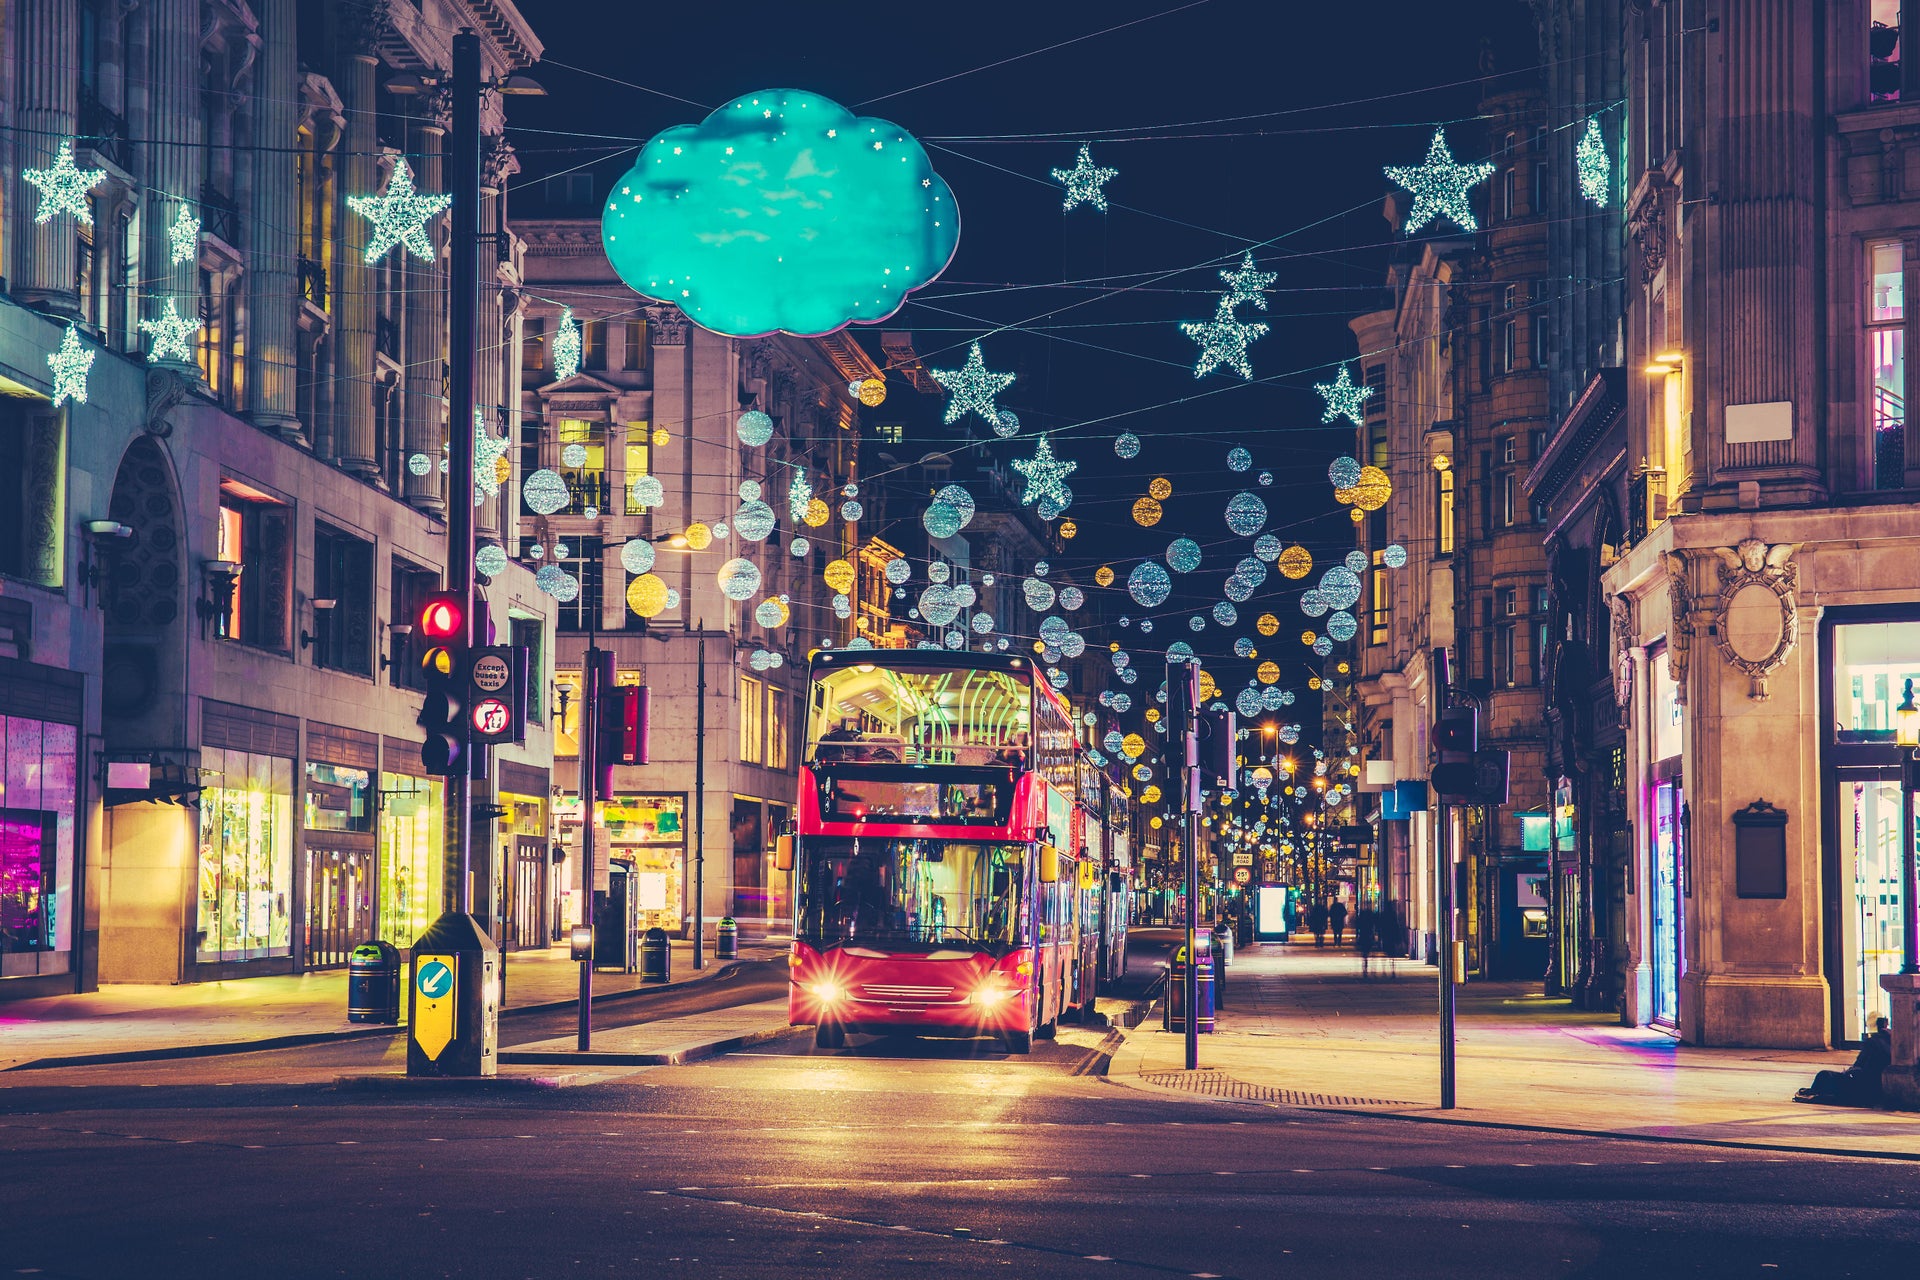 Autobus di Natale di Londra